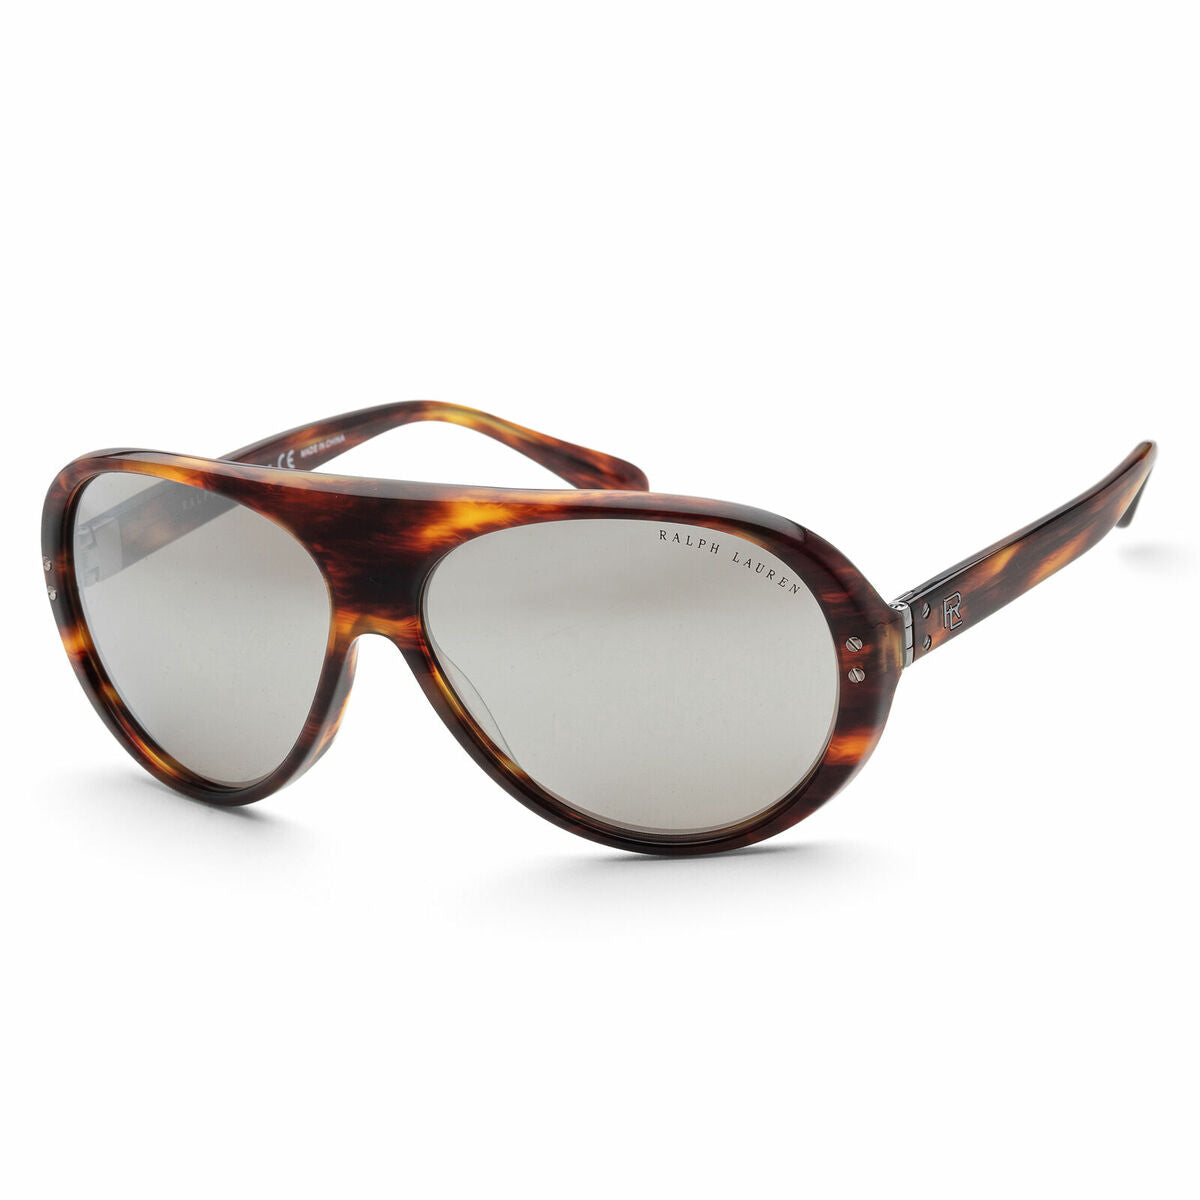 Ralph Lauren Ladies' Sunglasses  0rl8194-50076g  50 Mm Gbby2 In Brown